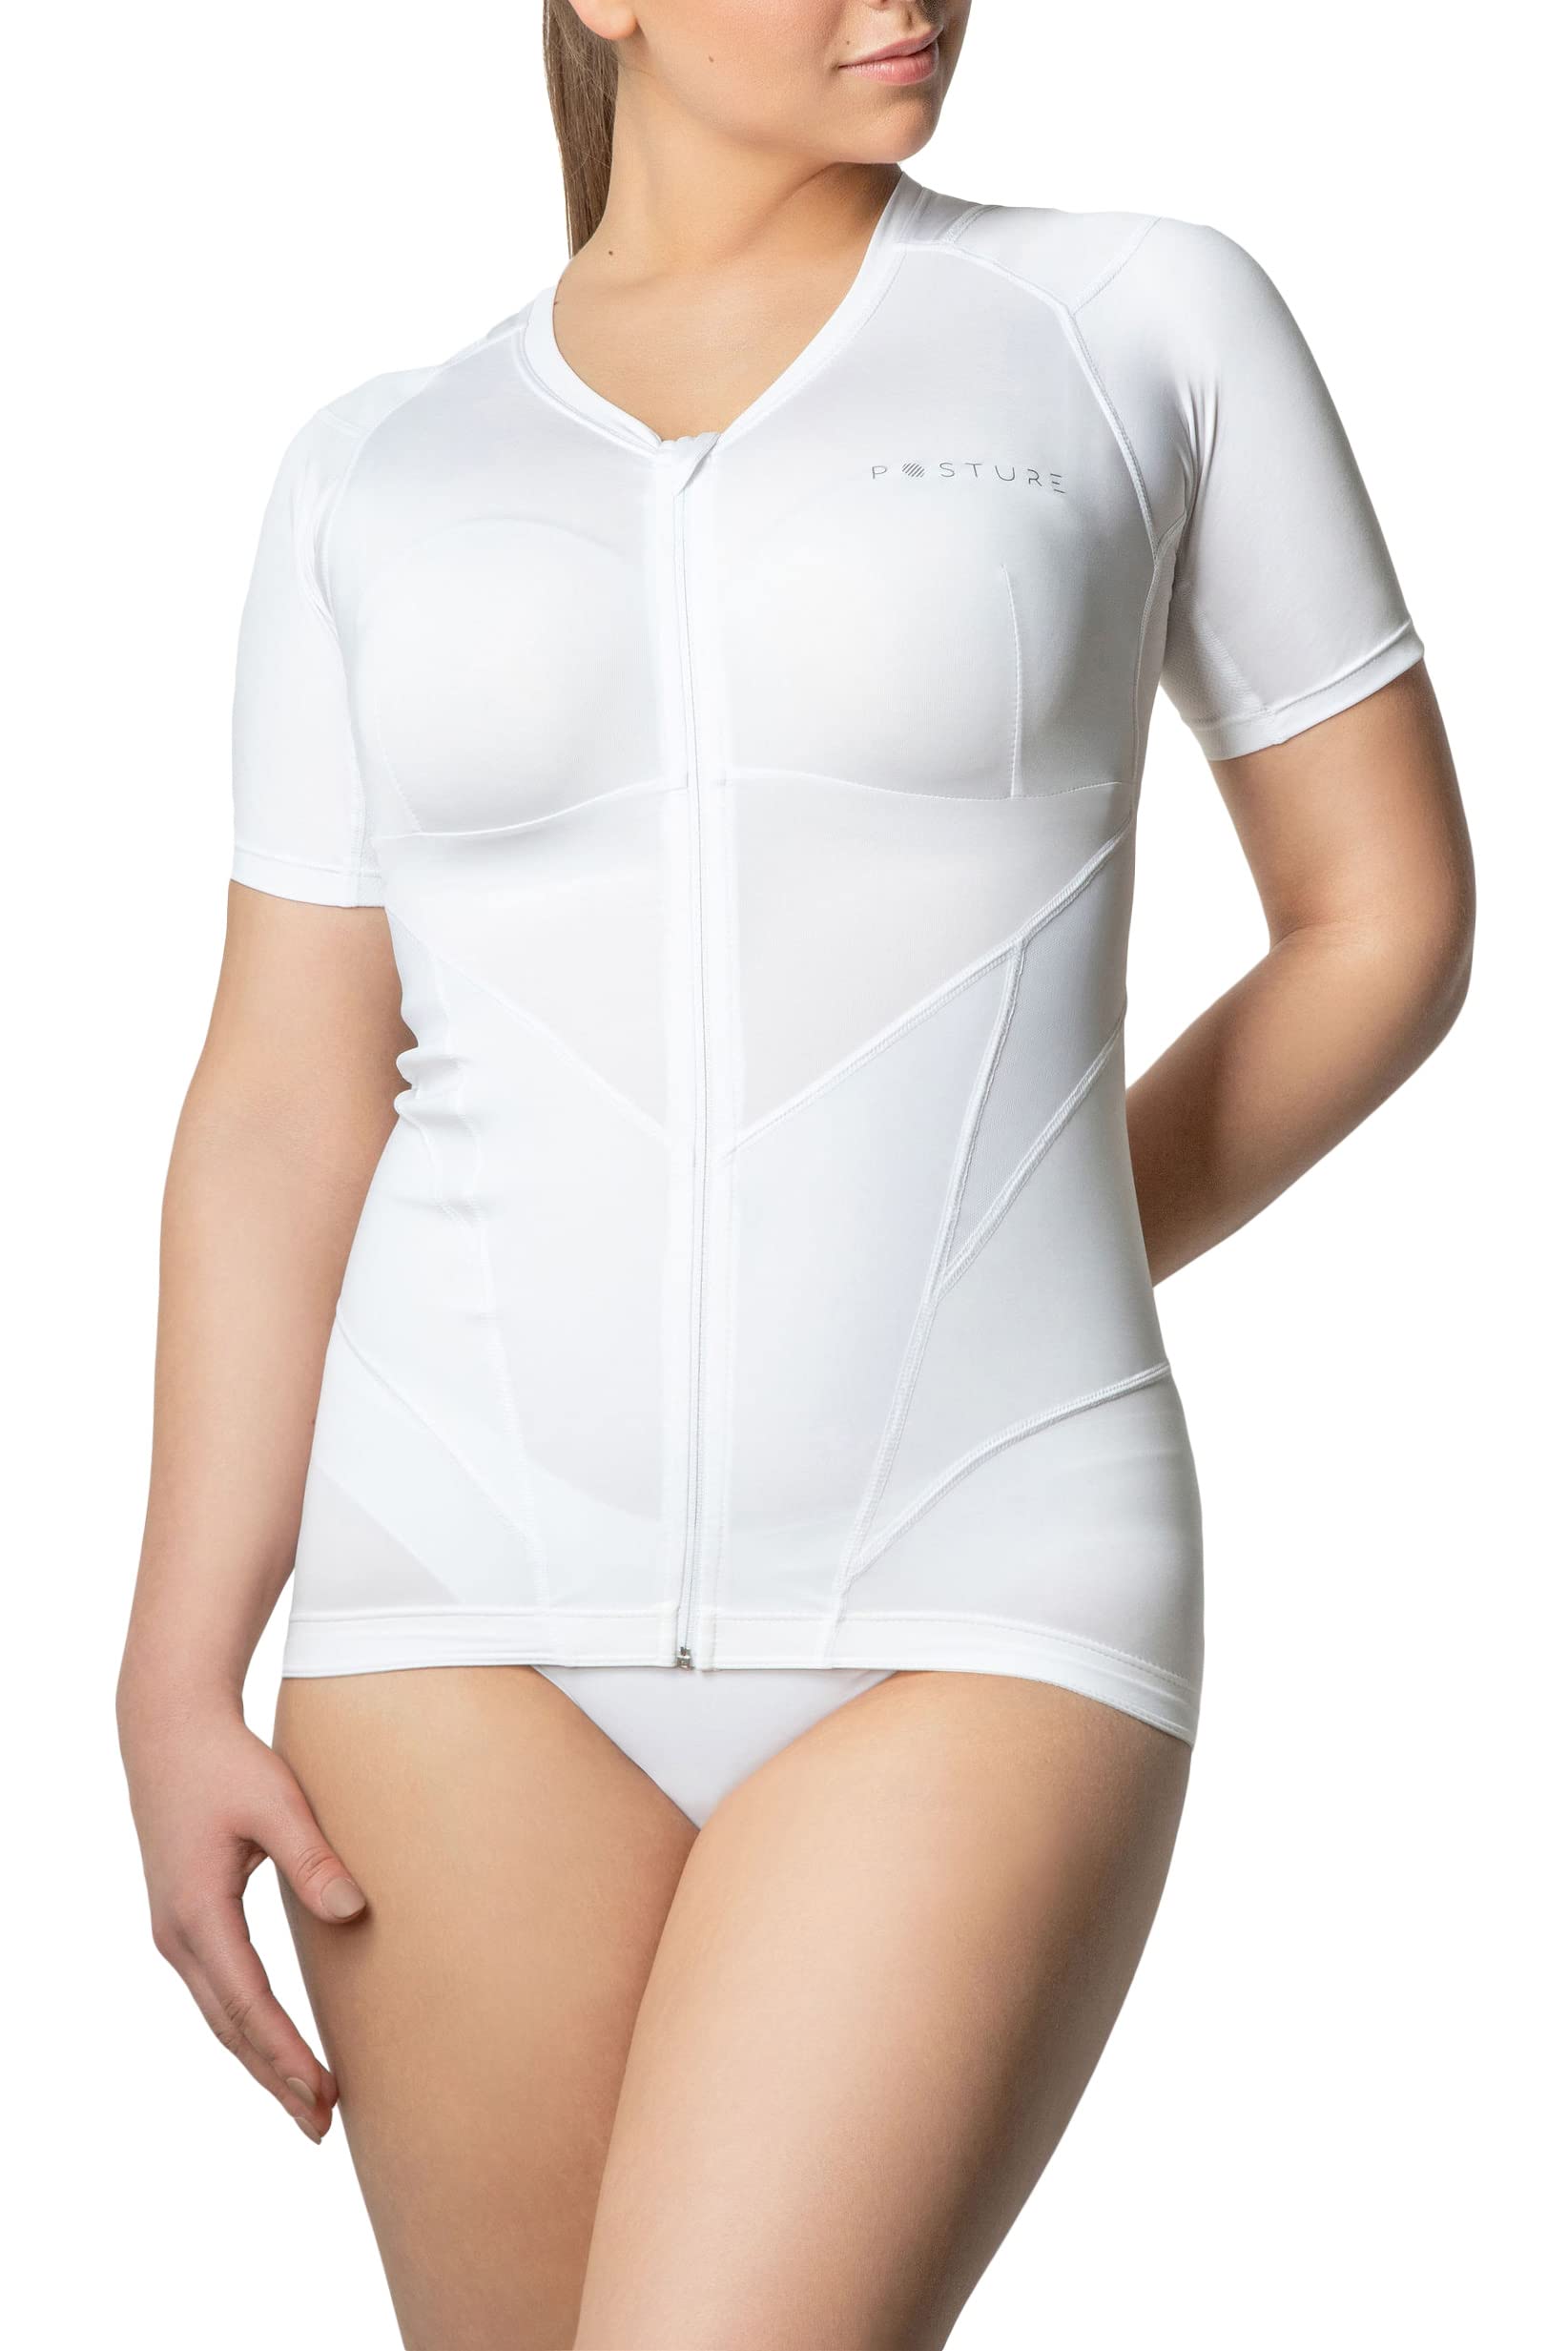 chic  Relaxsan Posture 6070-RP (Blanc XS) Tee Shirt Correcteur de Posture Femme, Maintien Dos, Respirant mJ1f9raUE en France Online